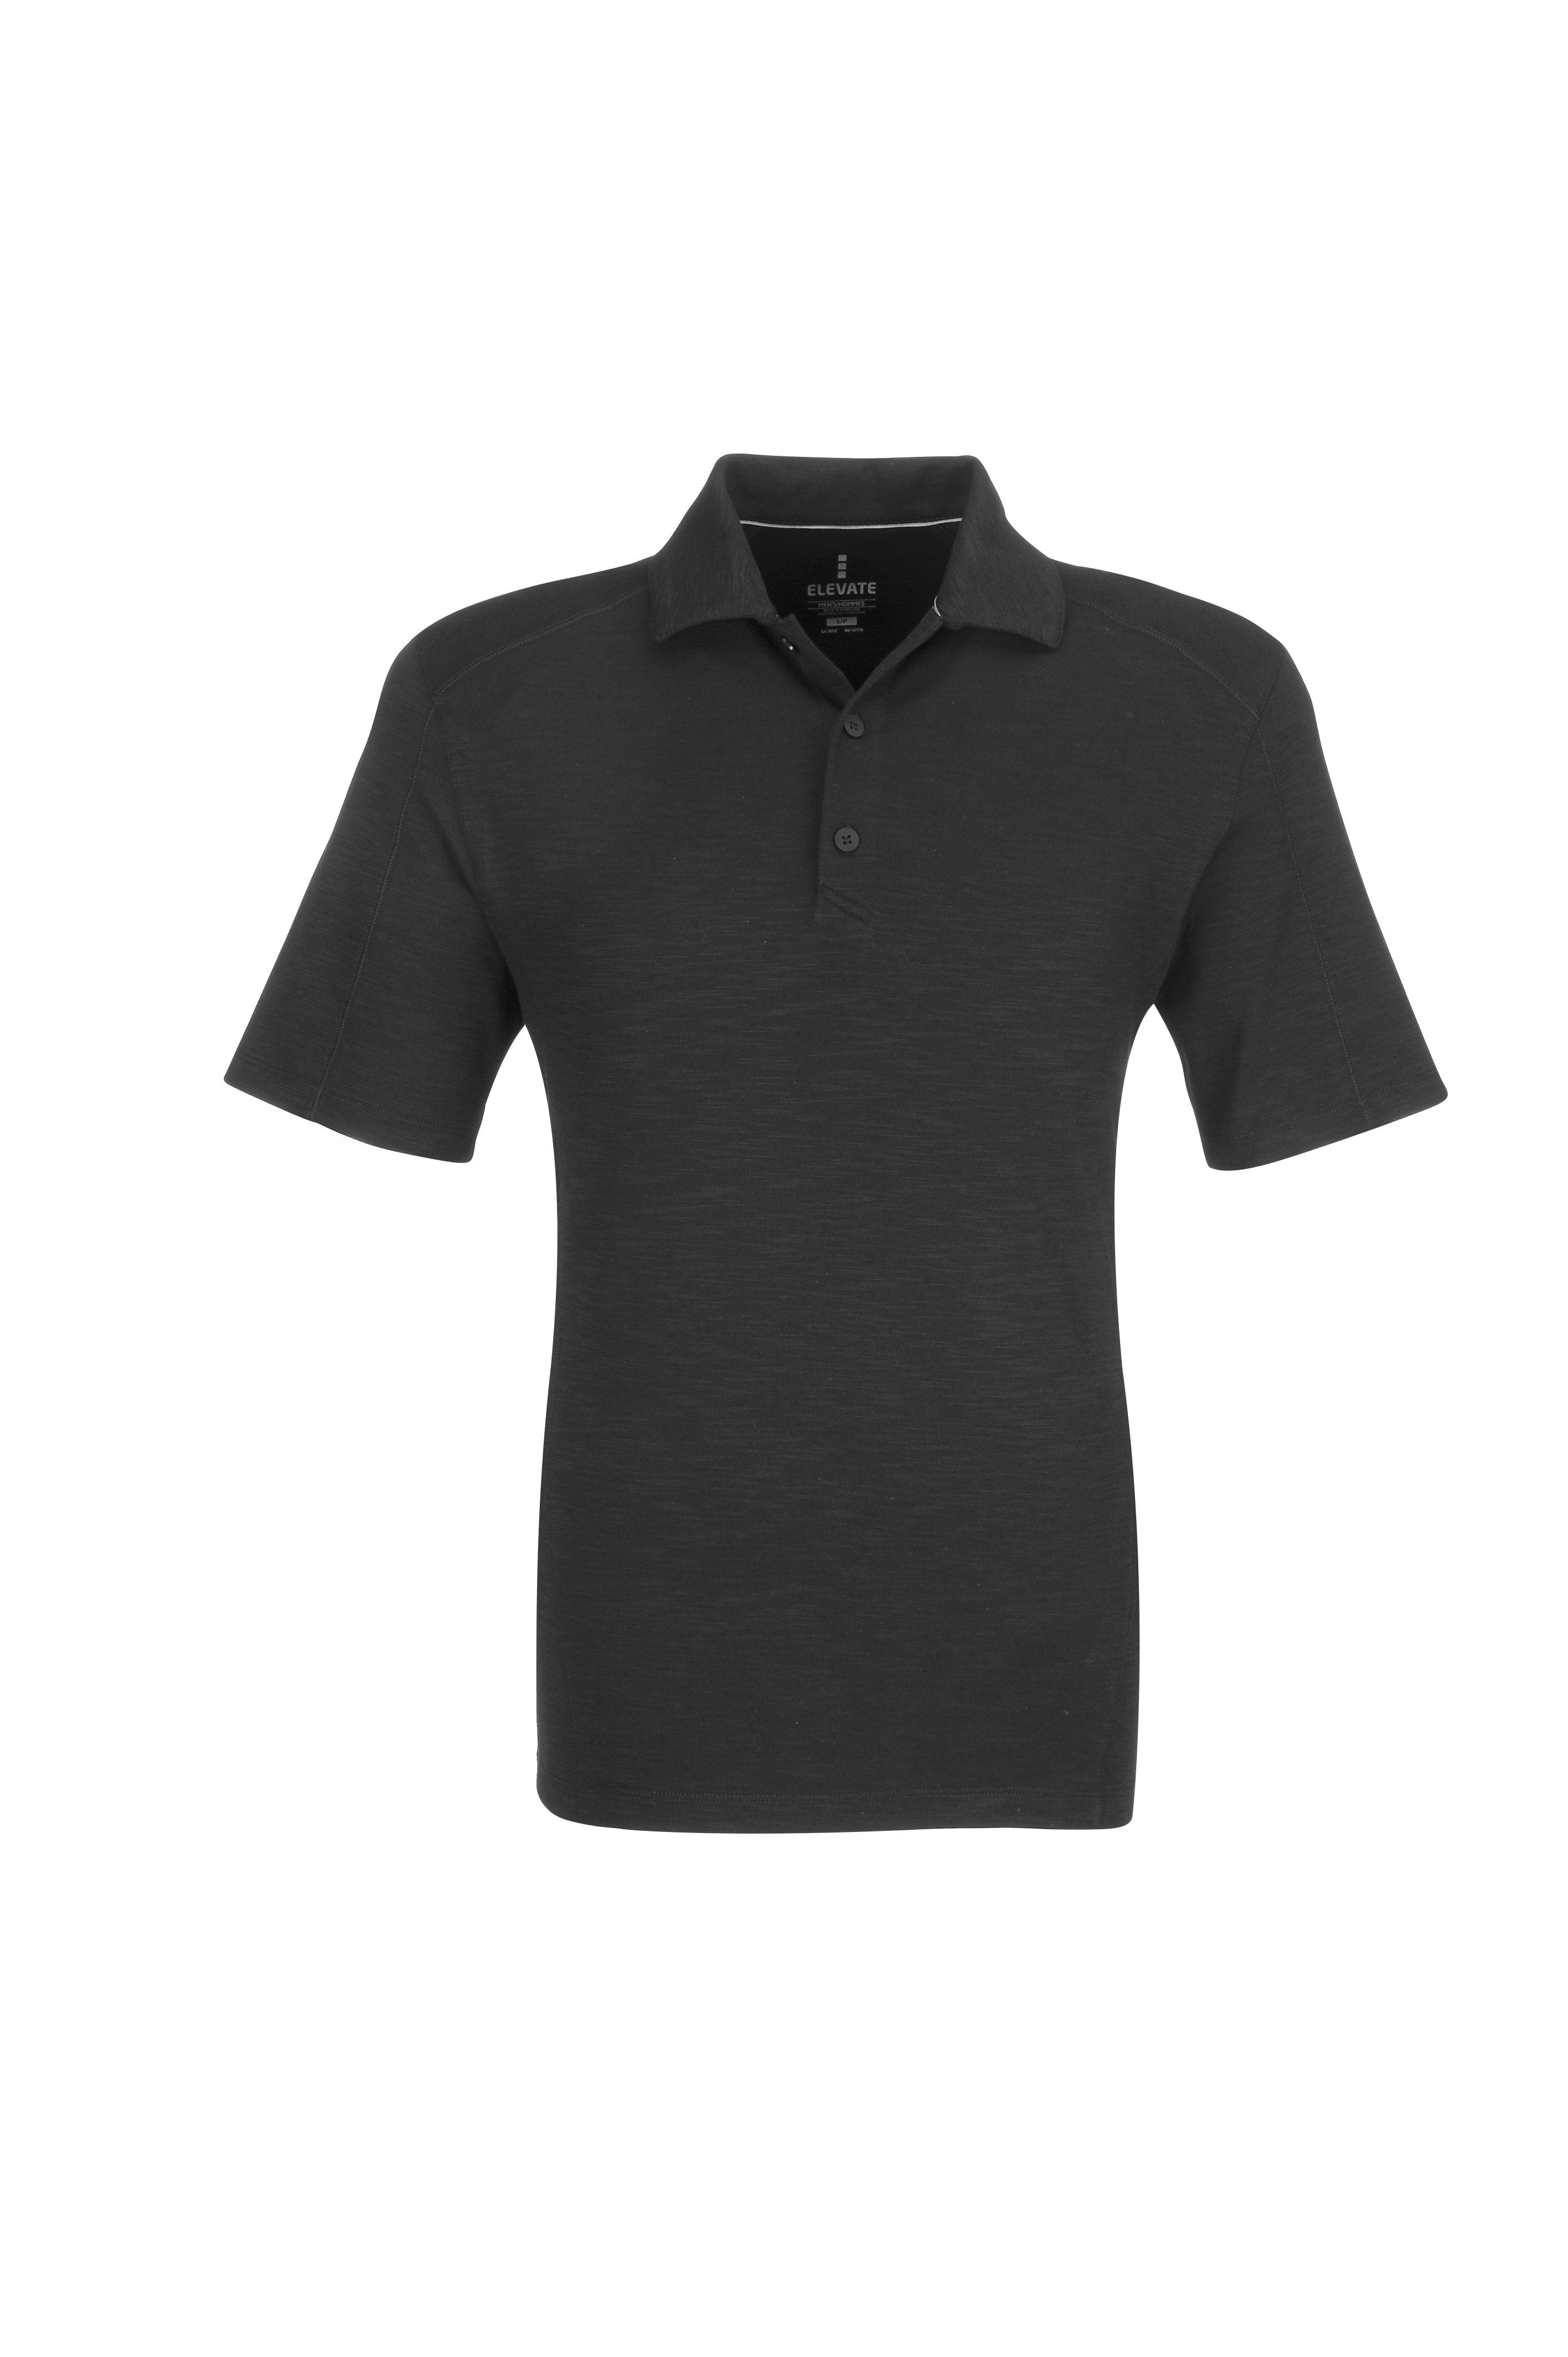 Mens Jepson Golf Shirt - Grey Only-L-Black-BL